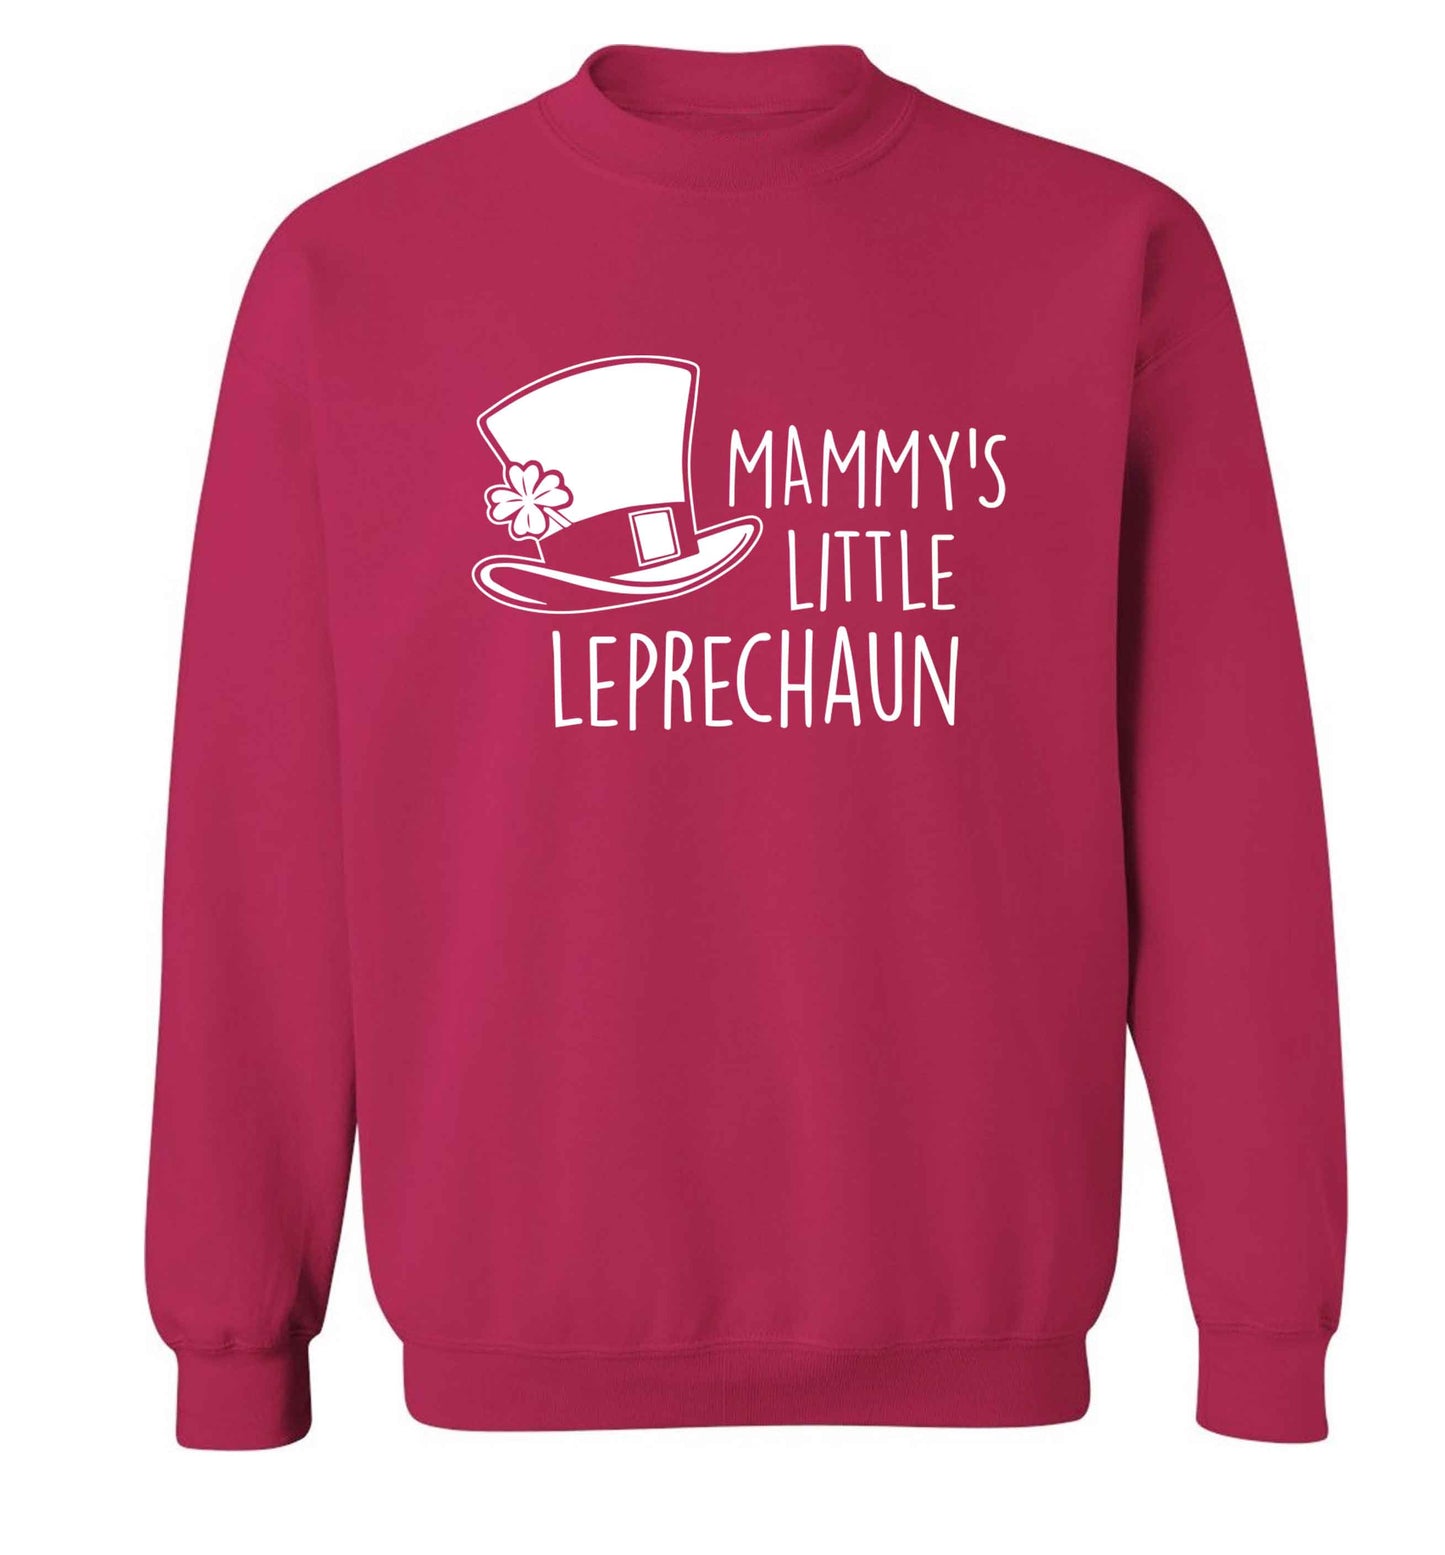 Mammy's little leprechaun adult's unisex pink sweater 2XL